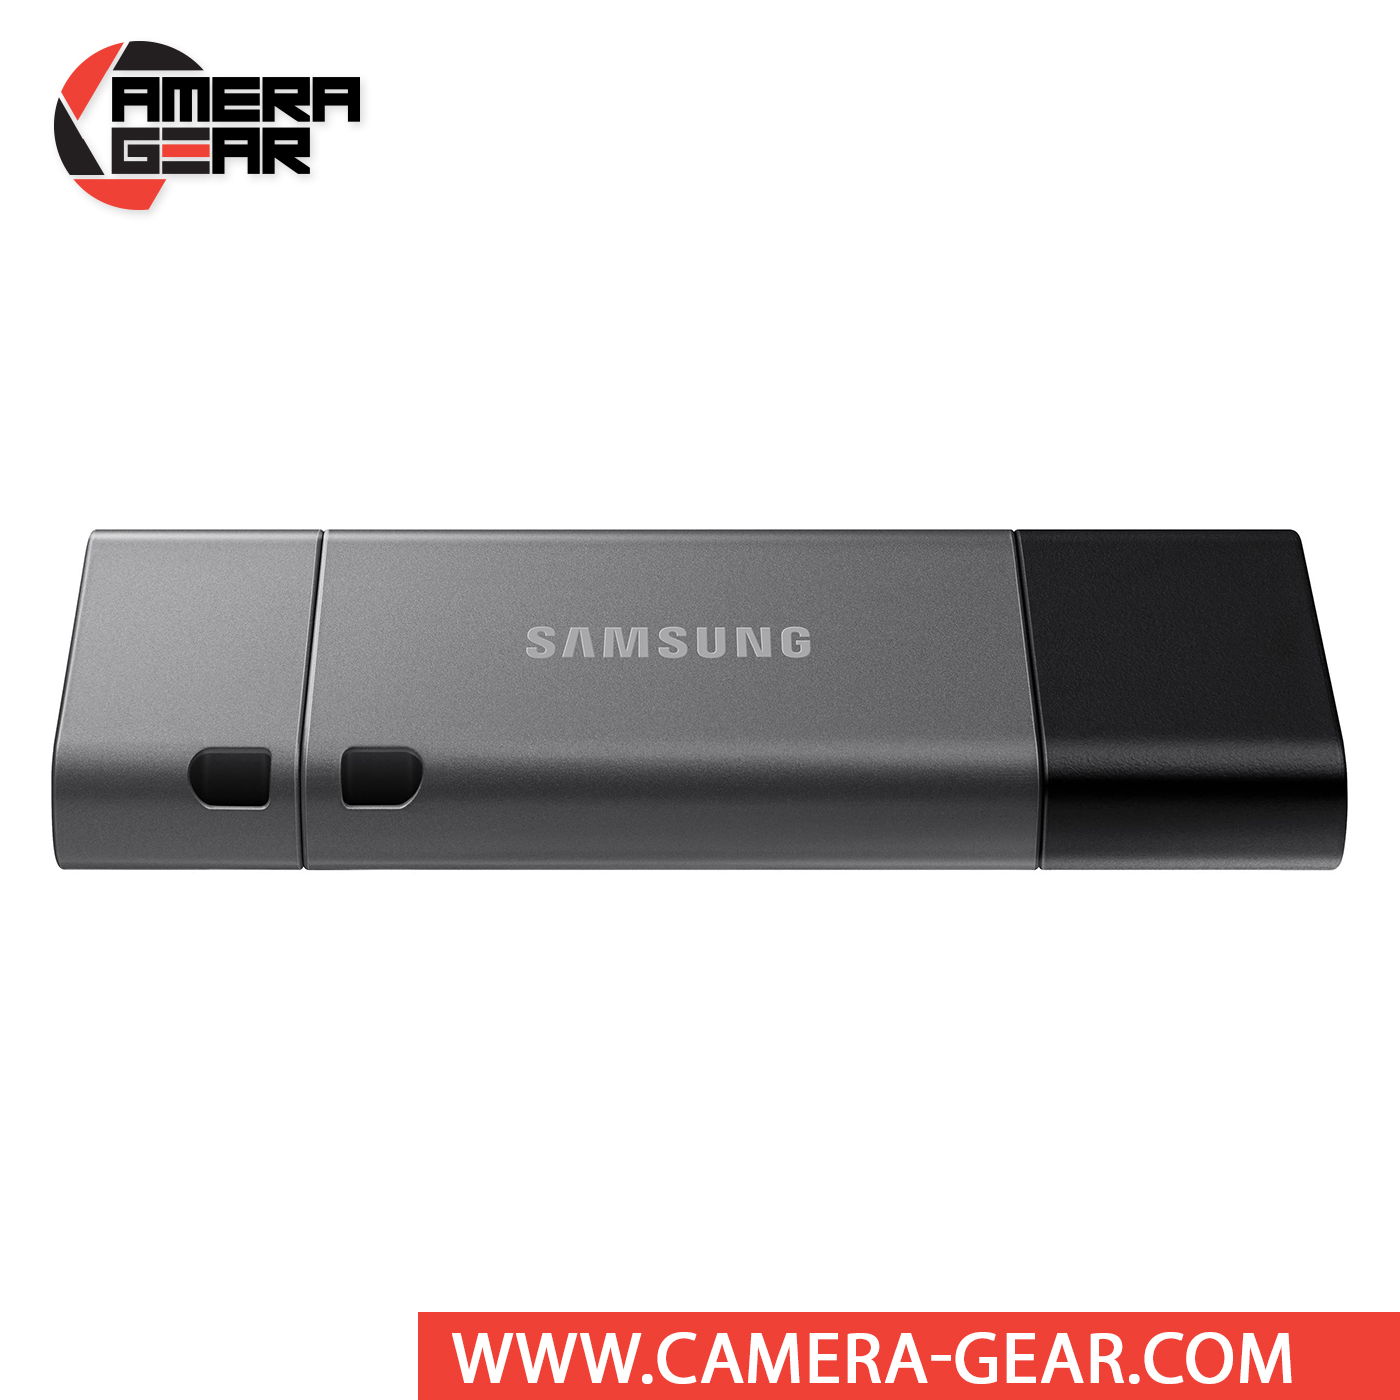 Samsung Flash Drive 128GB - Pendrive USB